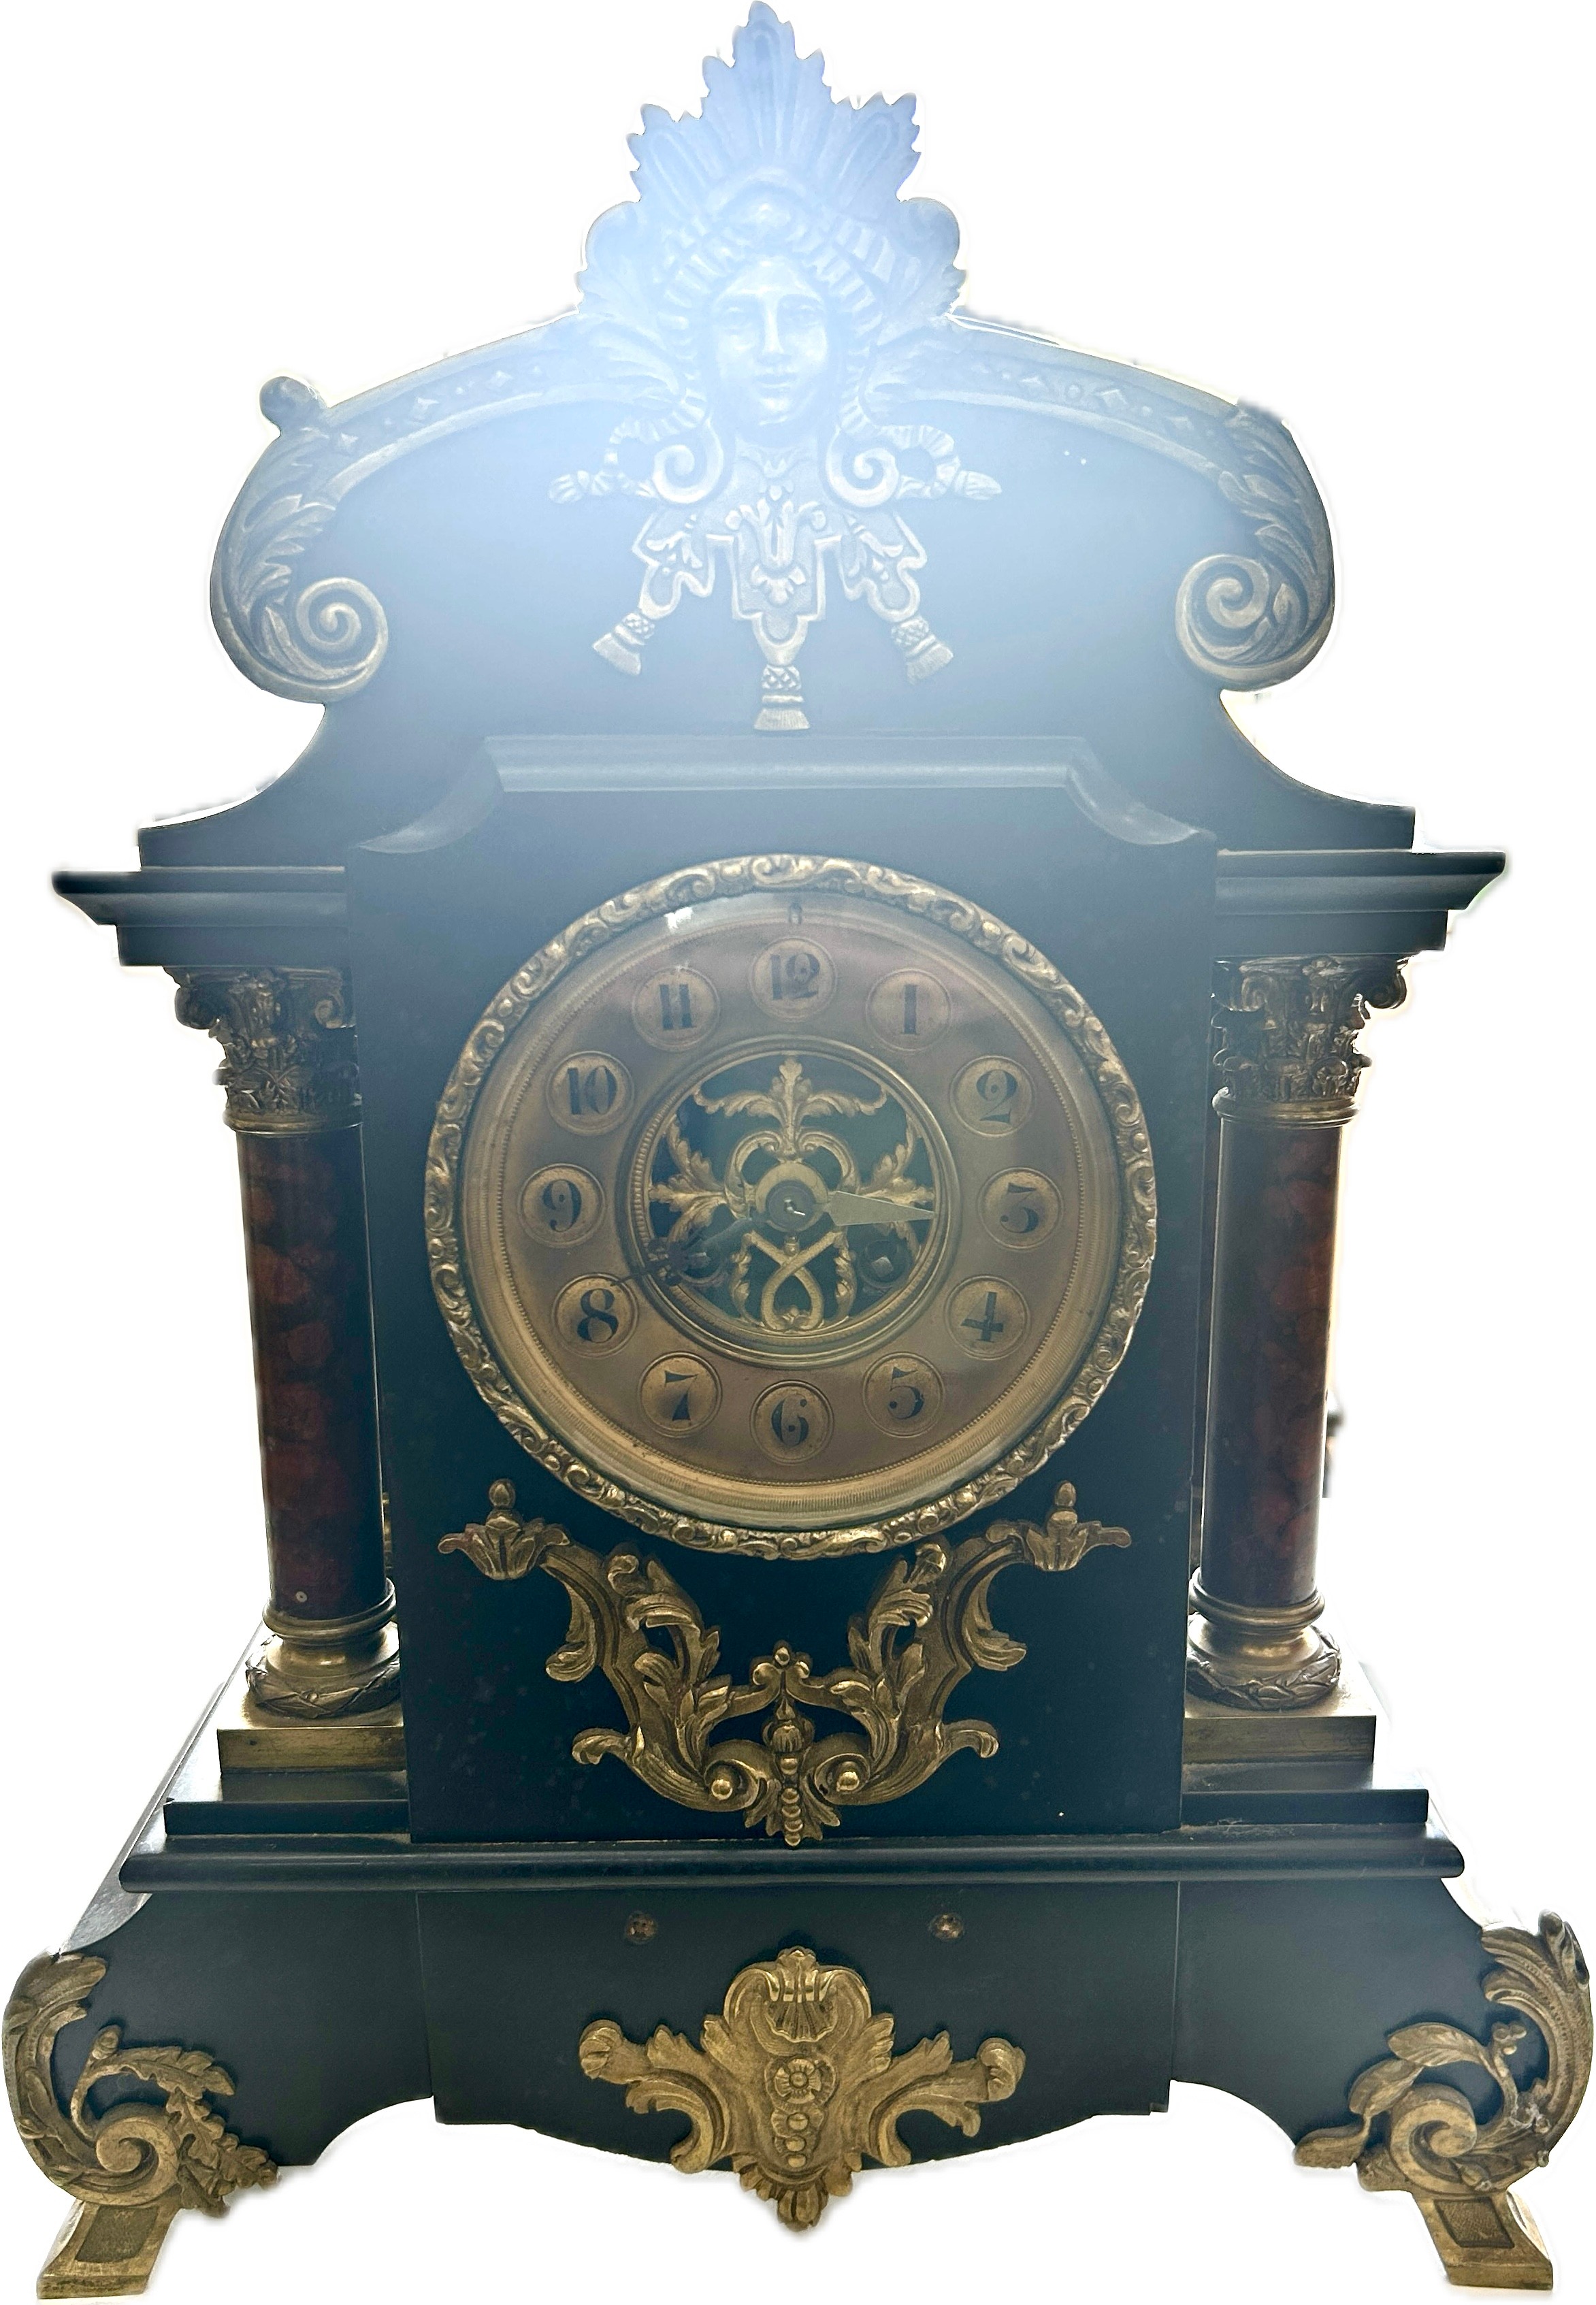 French ormolu slate mantel clock, untested